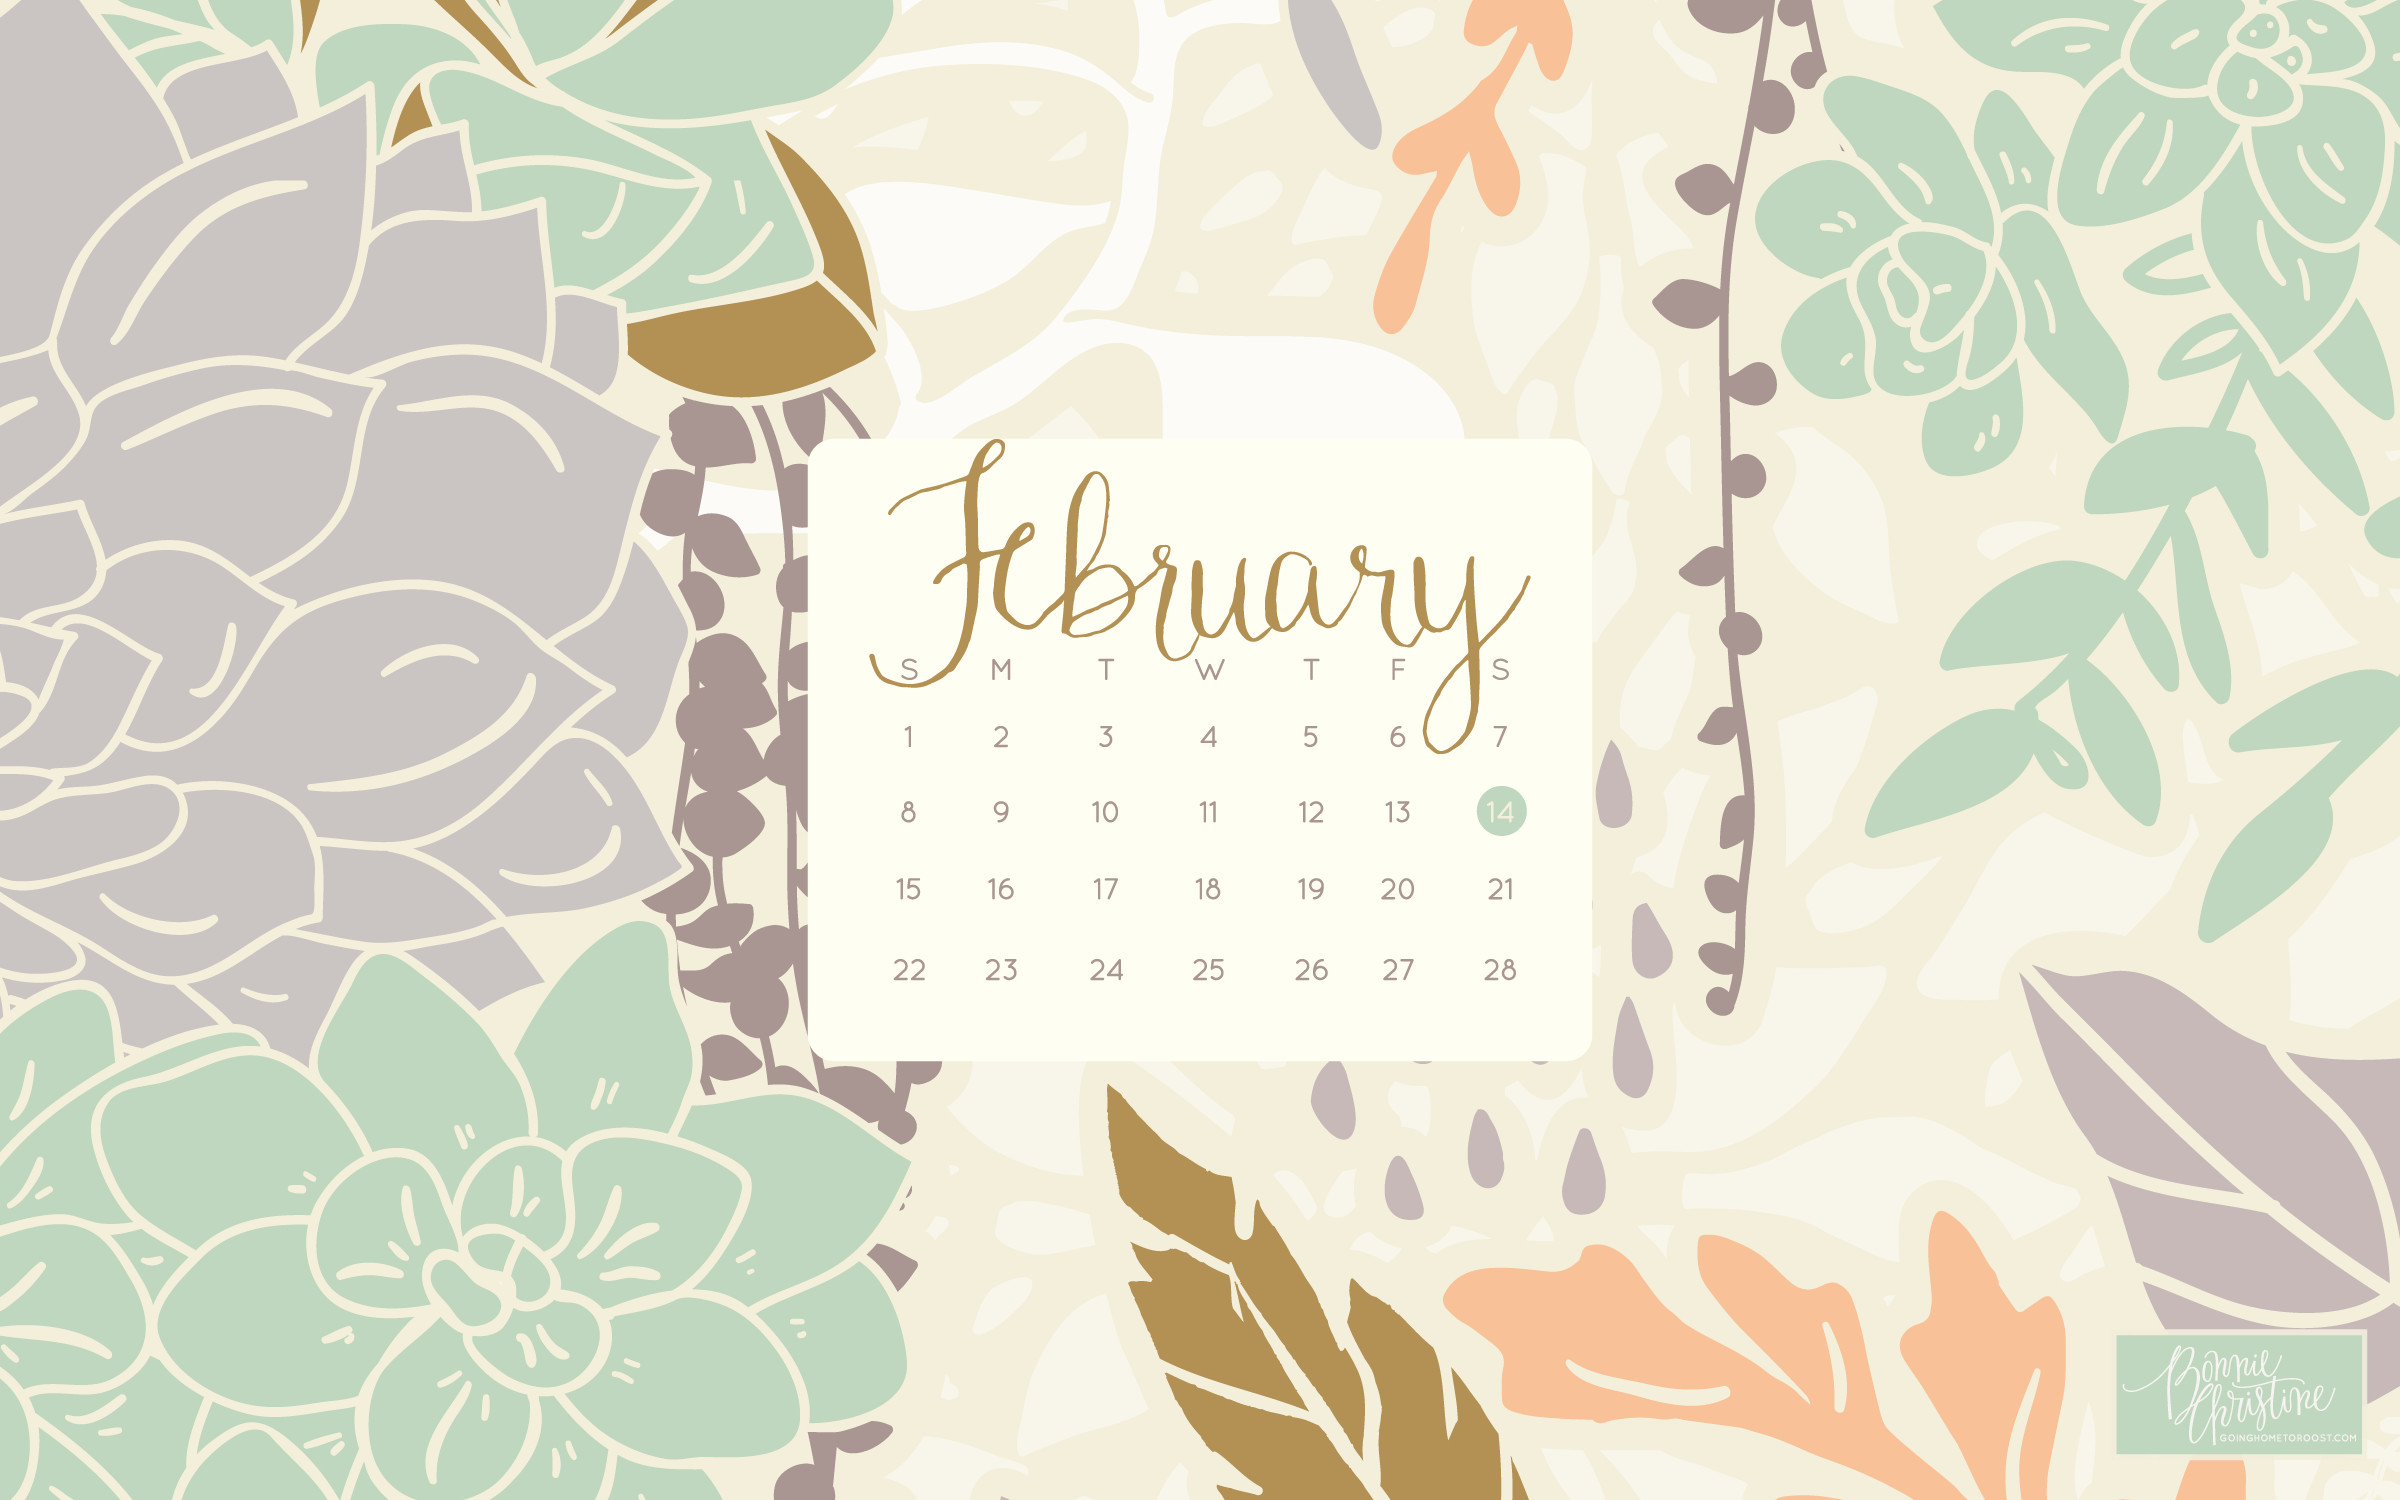 February Desktop Wallpaper (64+ pictures)